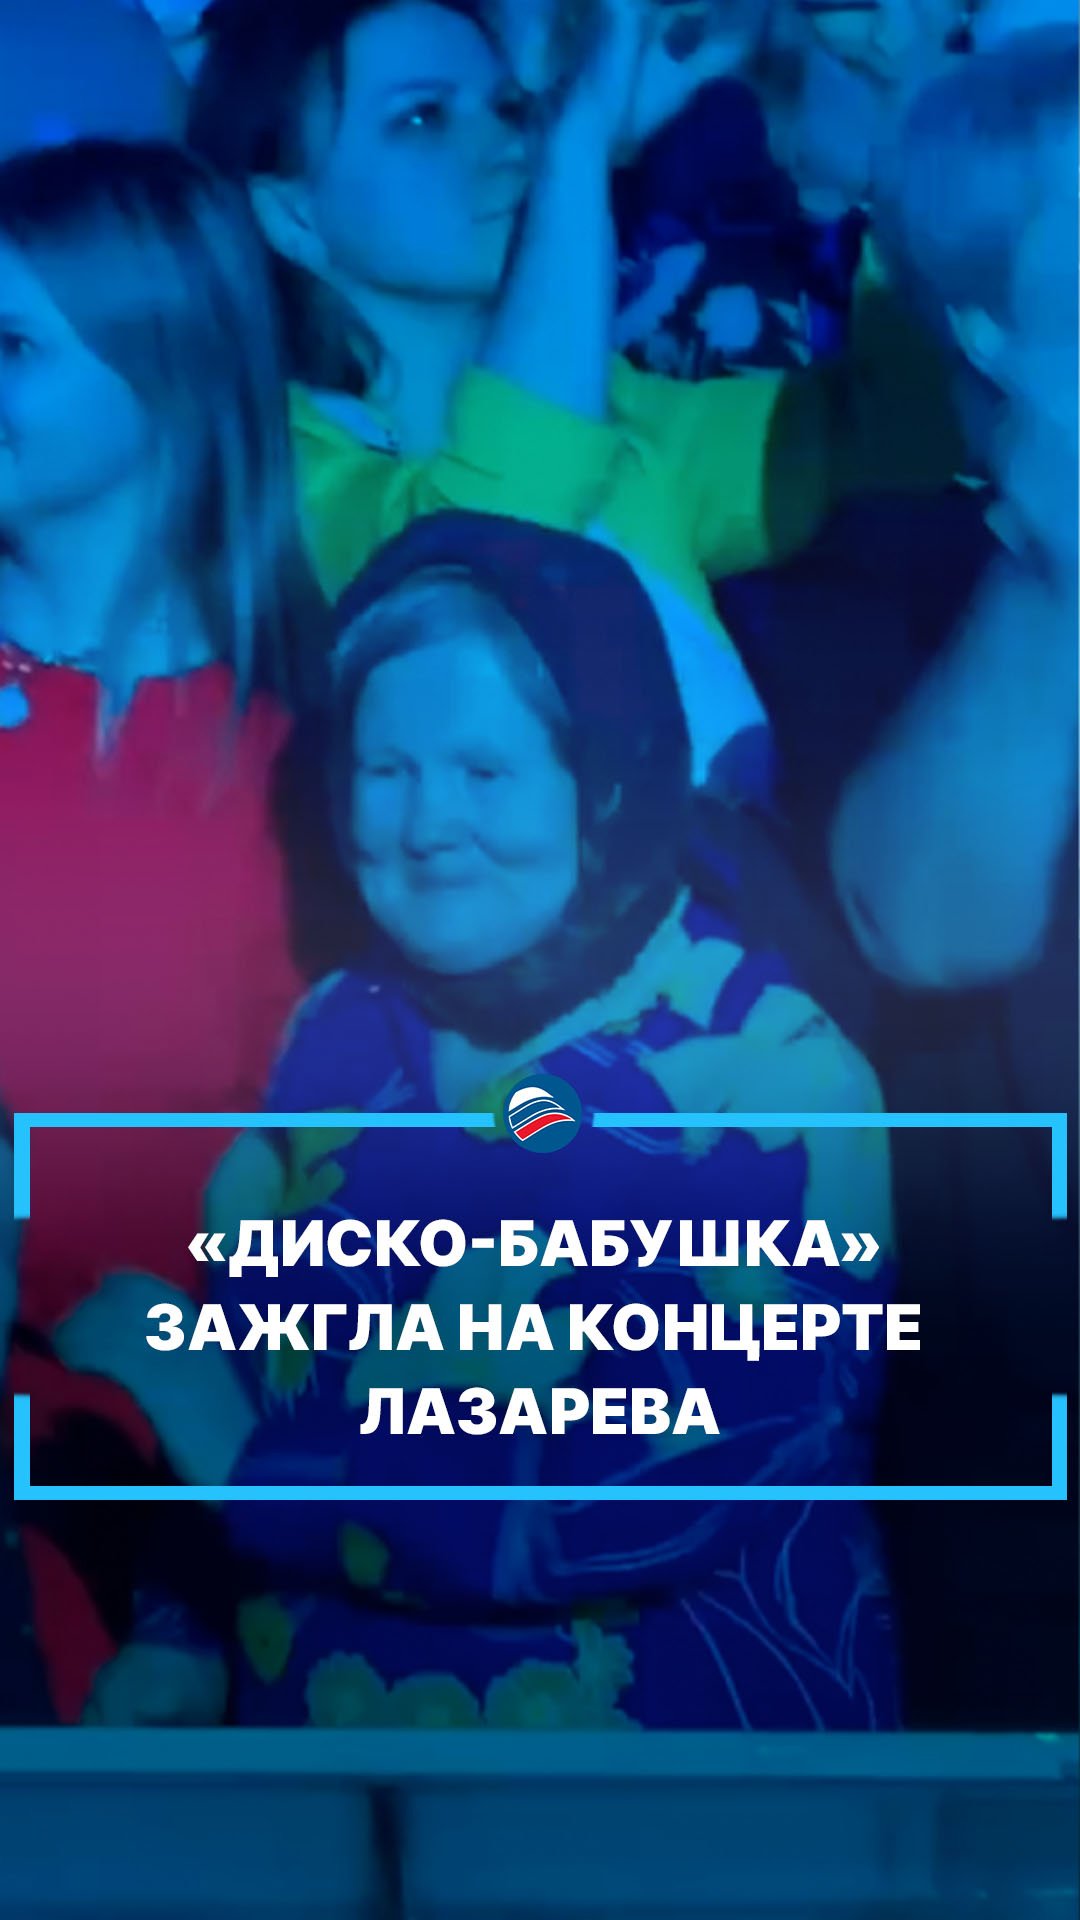 Диско бабушка сыктывкар видео на концерте лазарева